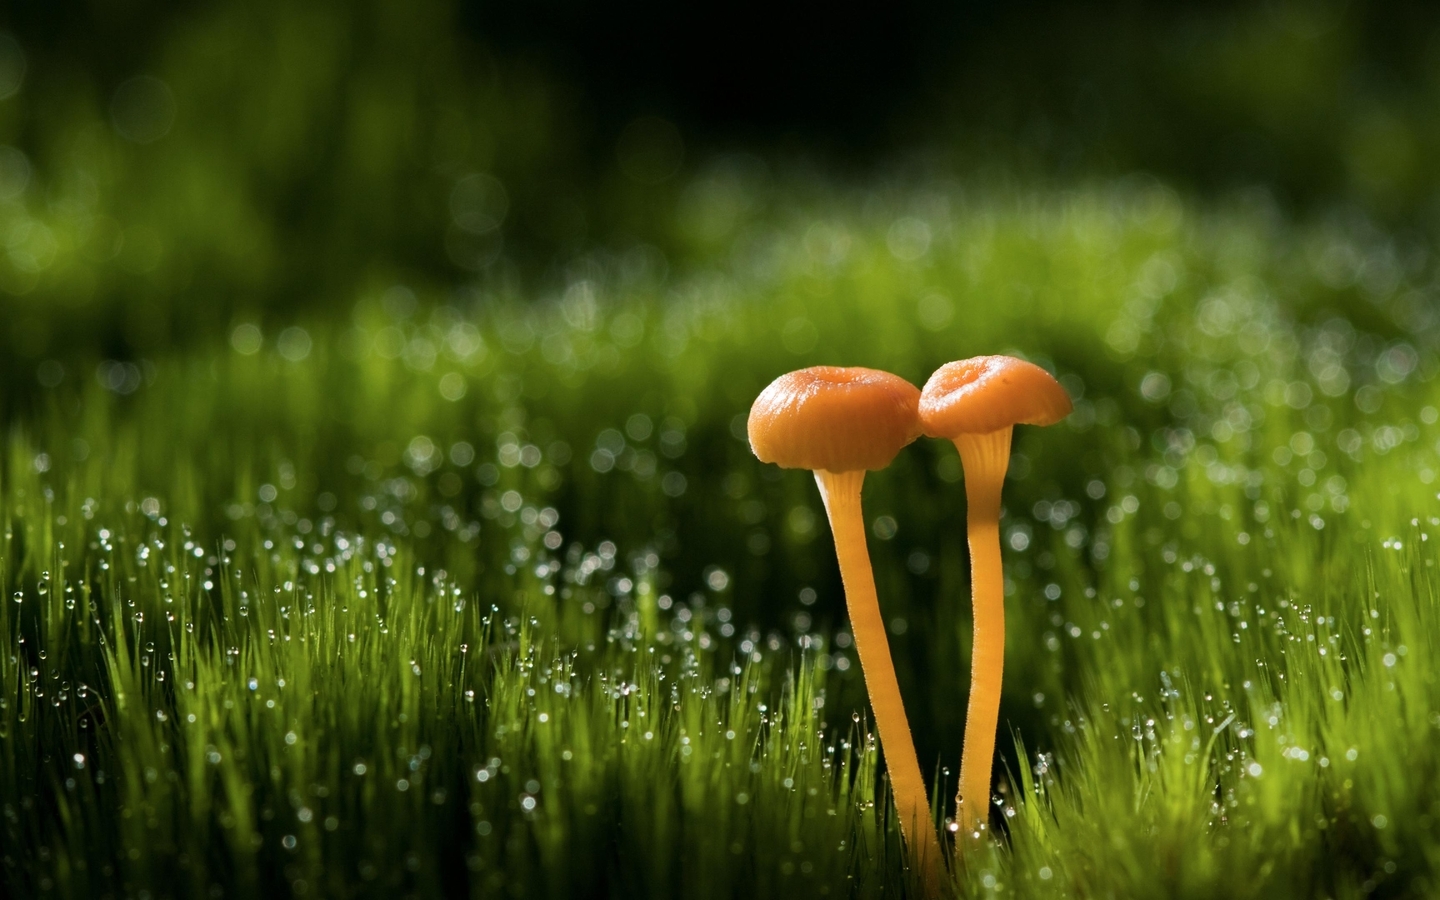 Image: Grass, mushrooms, couple, drops, dew, glare